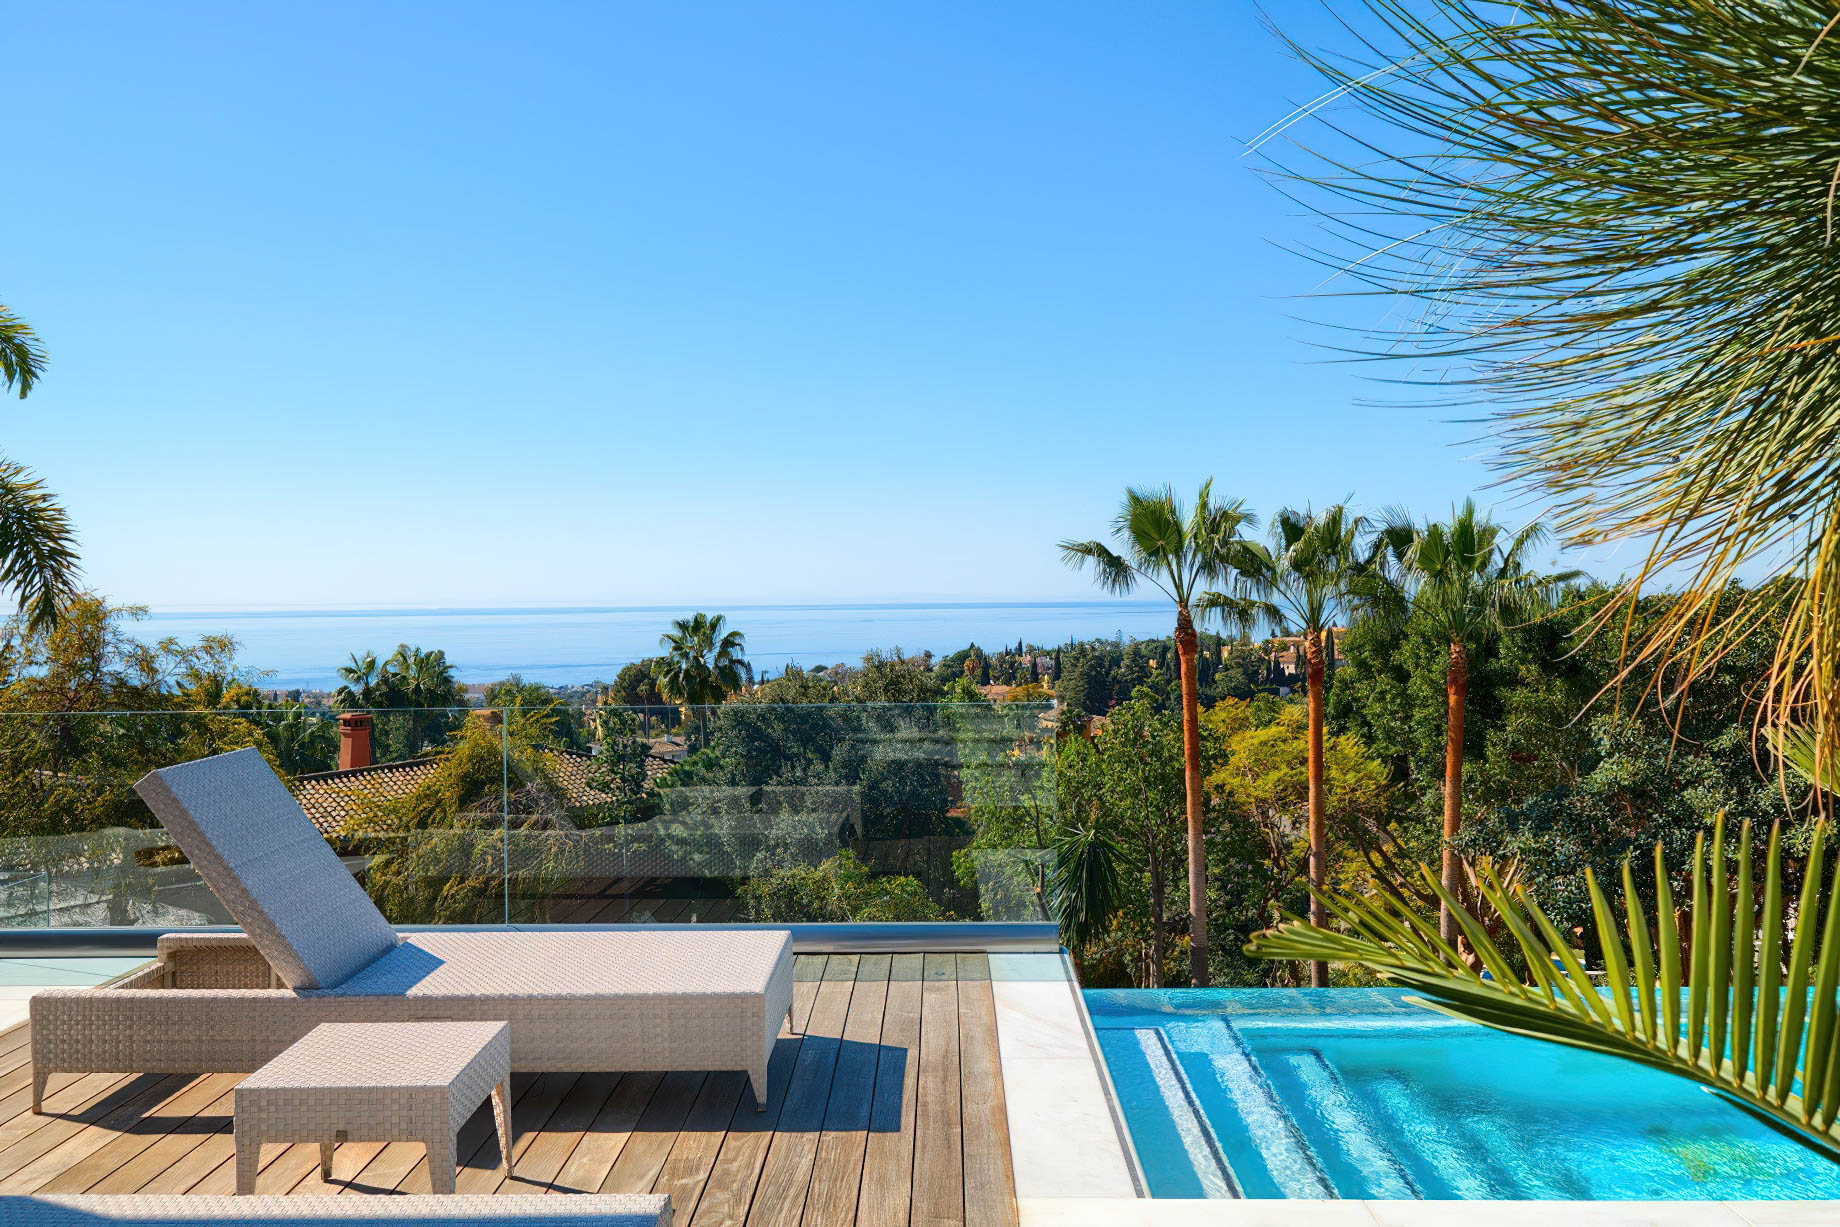 009 – Villa Beata Luxury Residence – Cascada de Camojan, Marbella, Spain – Exterior Pool Deck View